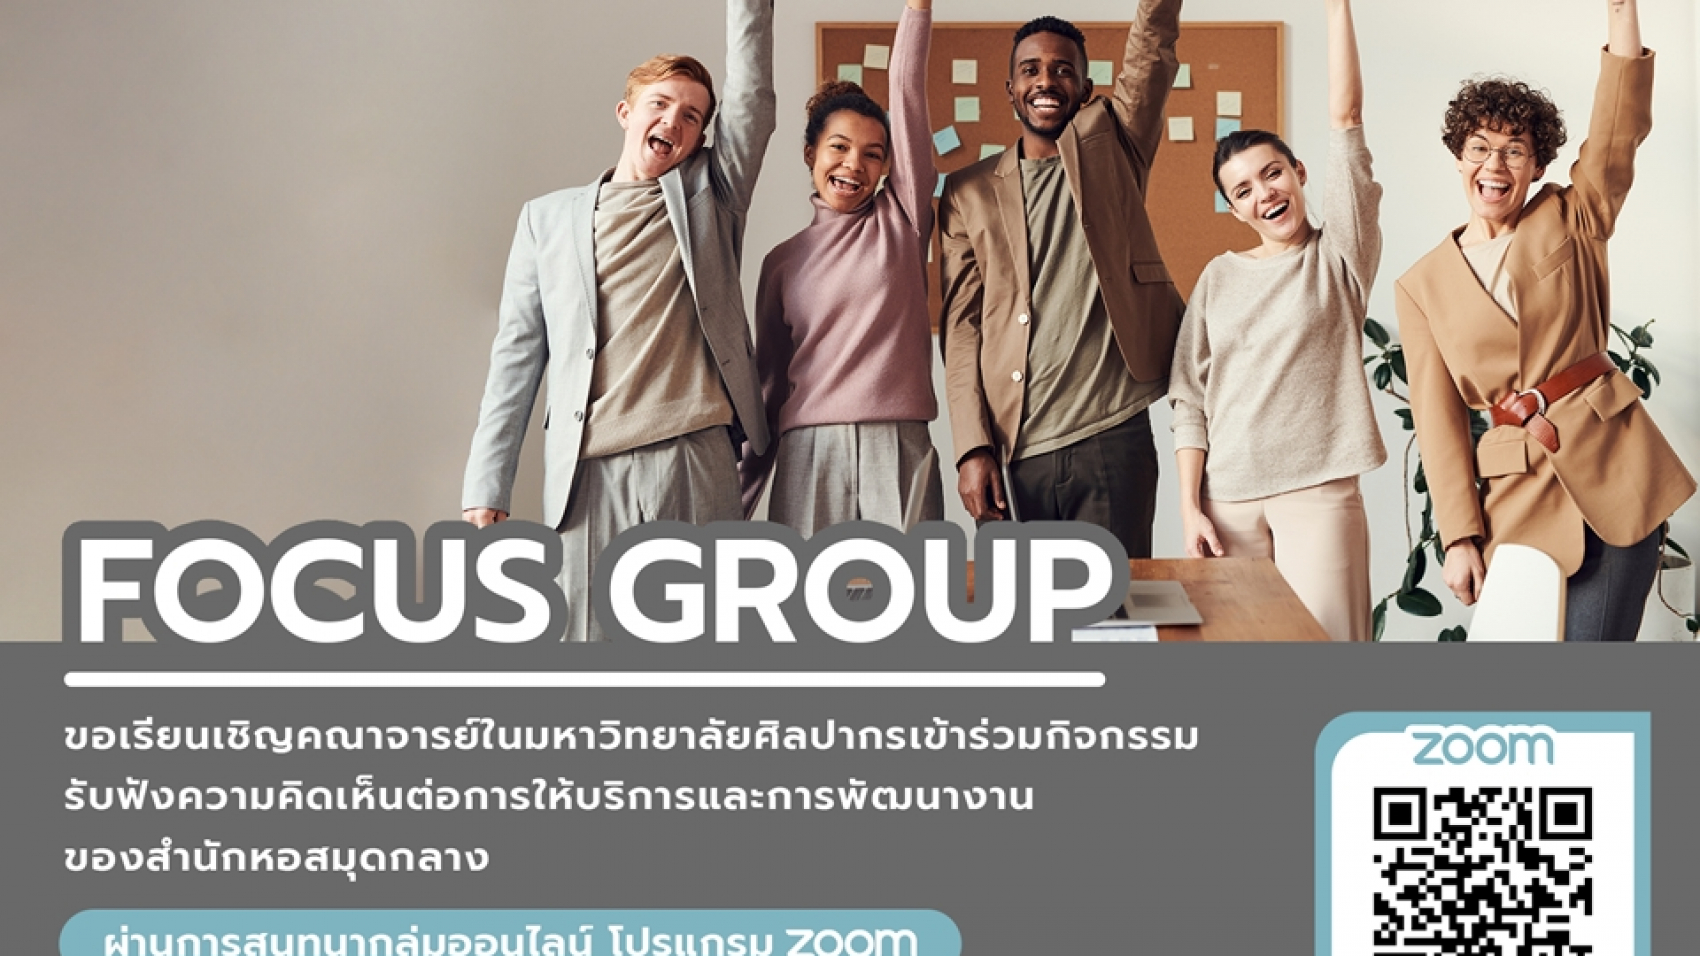 Focus-group-220465